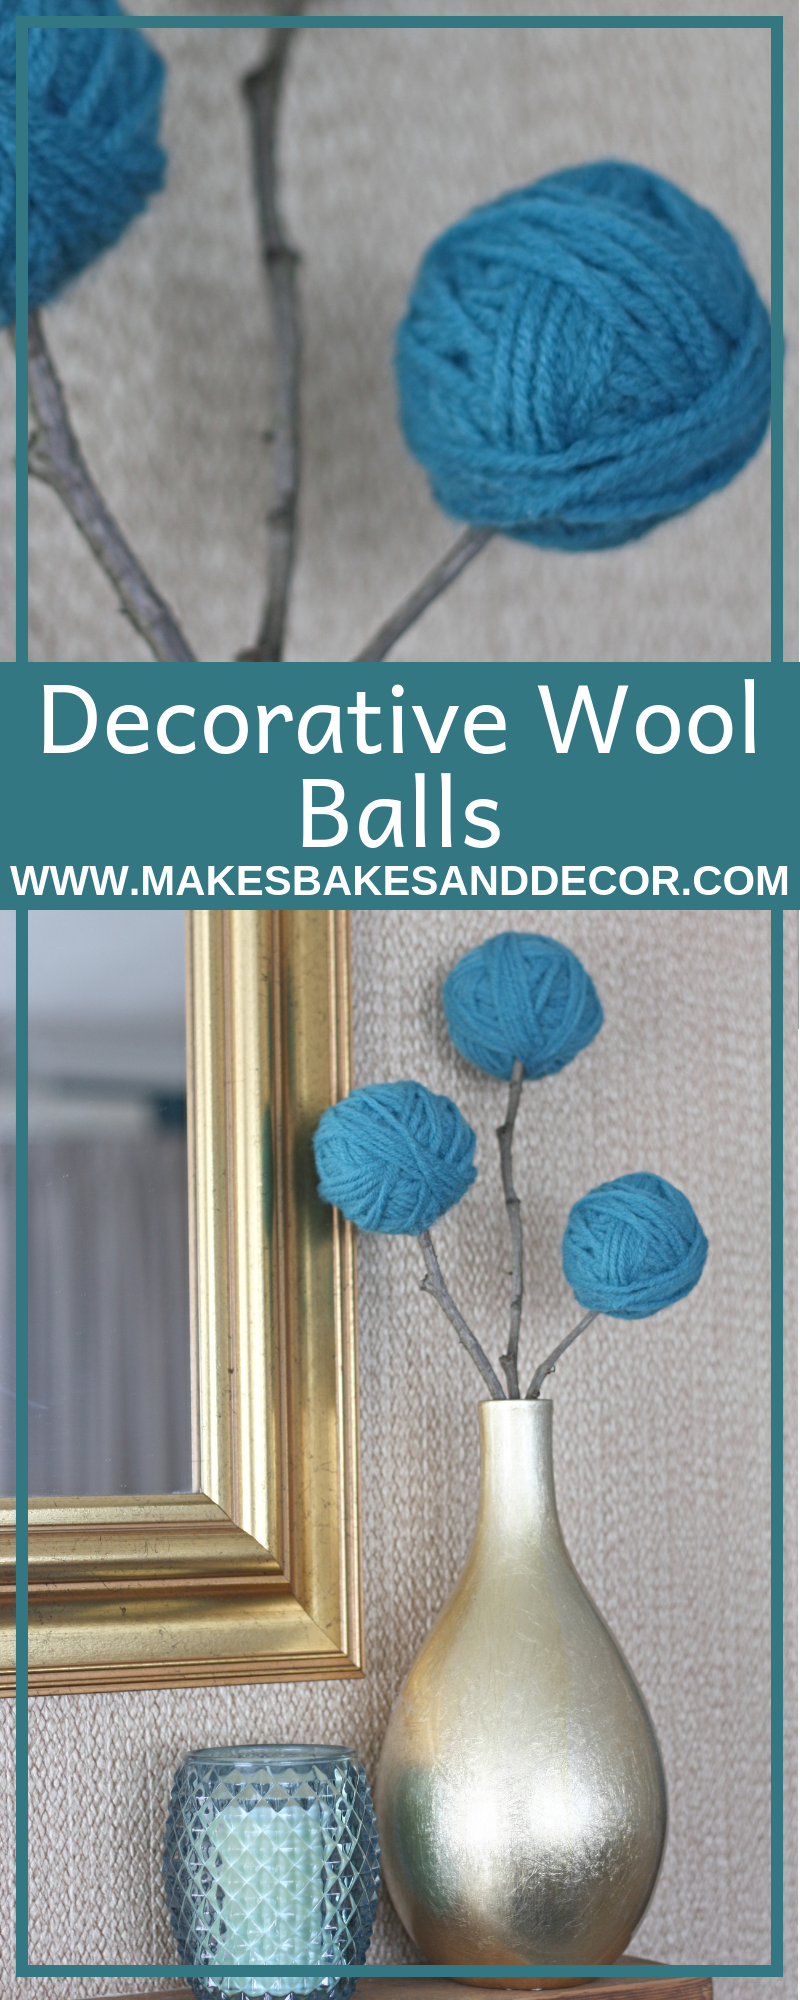 decorative wool balls